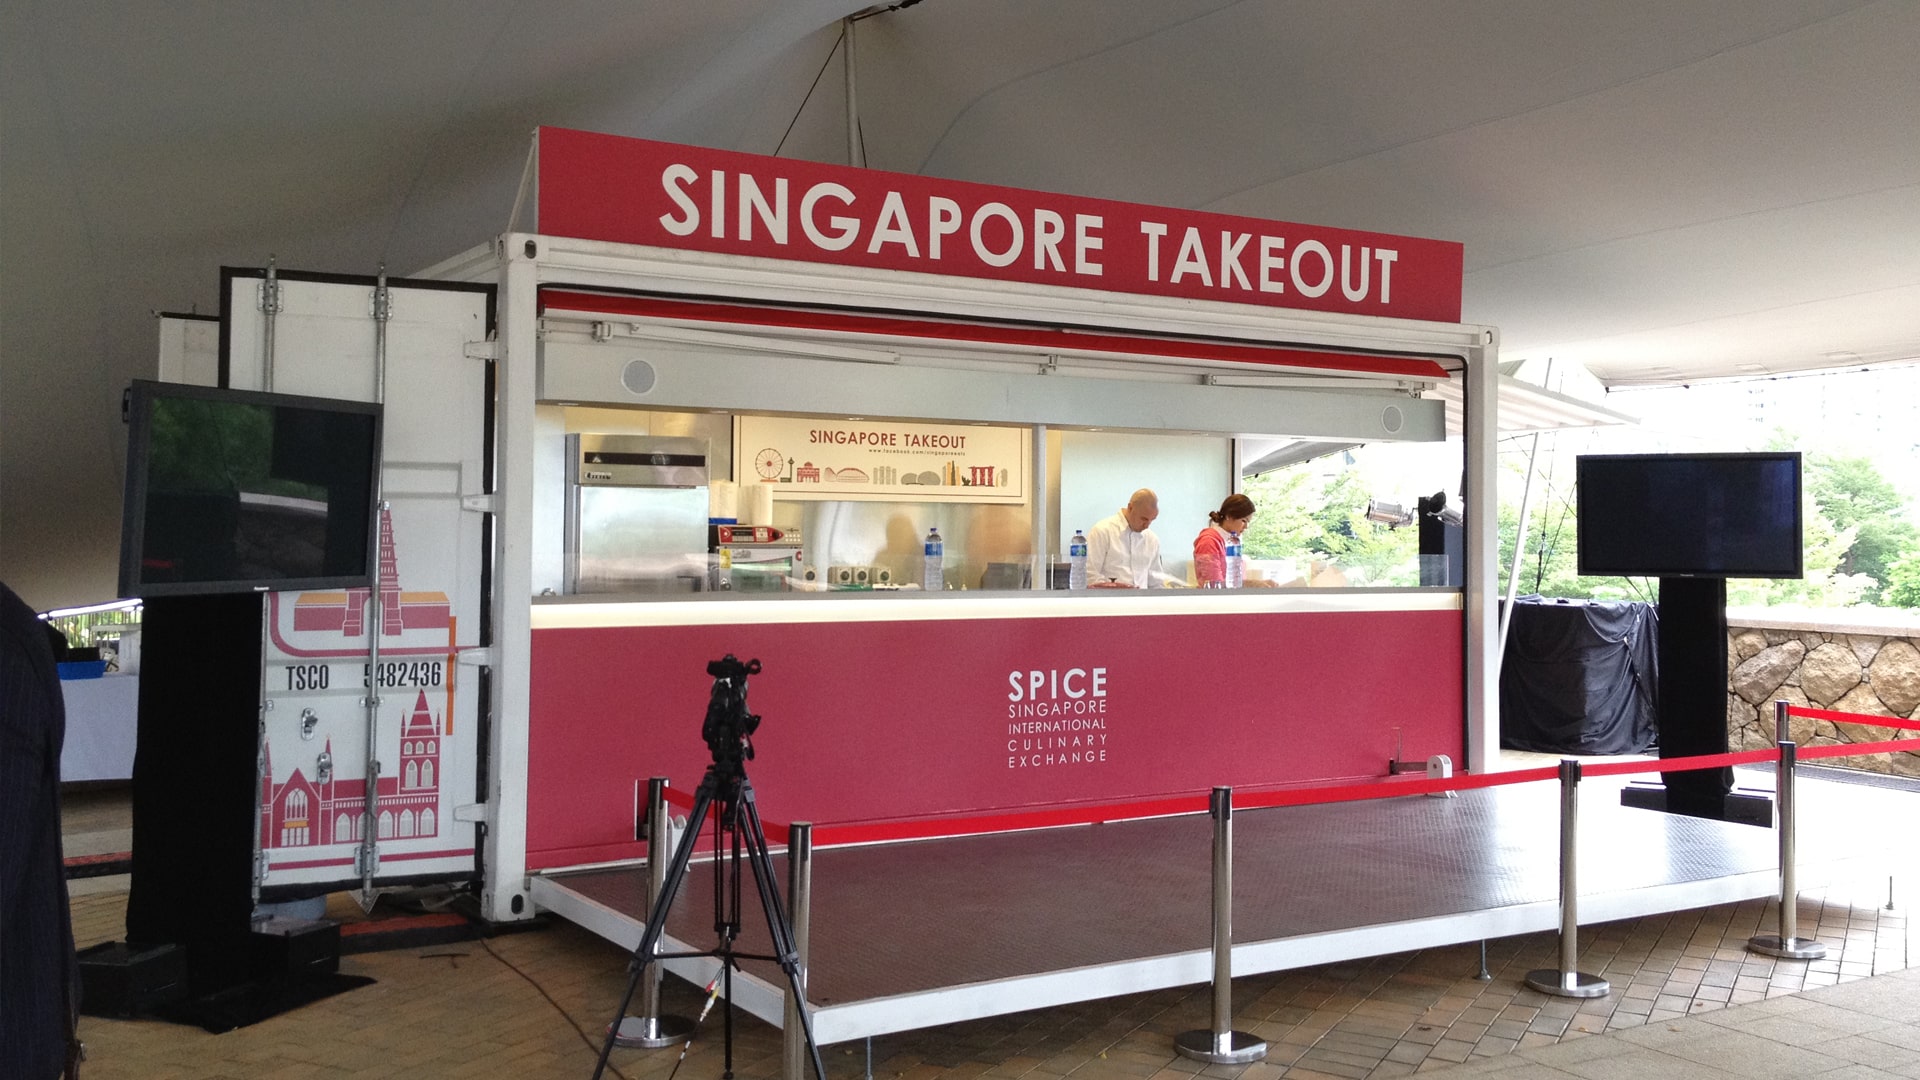 tsc_tubelar_f&b_movit-kitchen_singapore-takeout-hong-kong-01_1920x1080-min